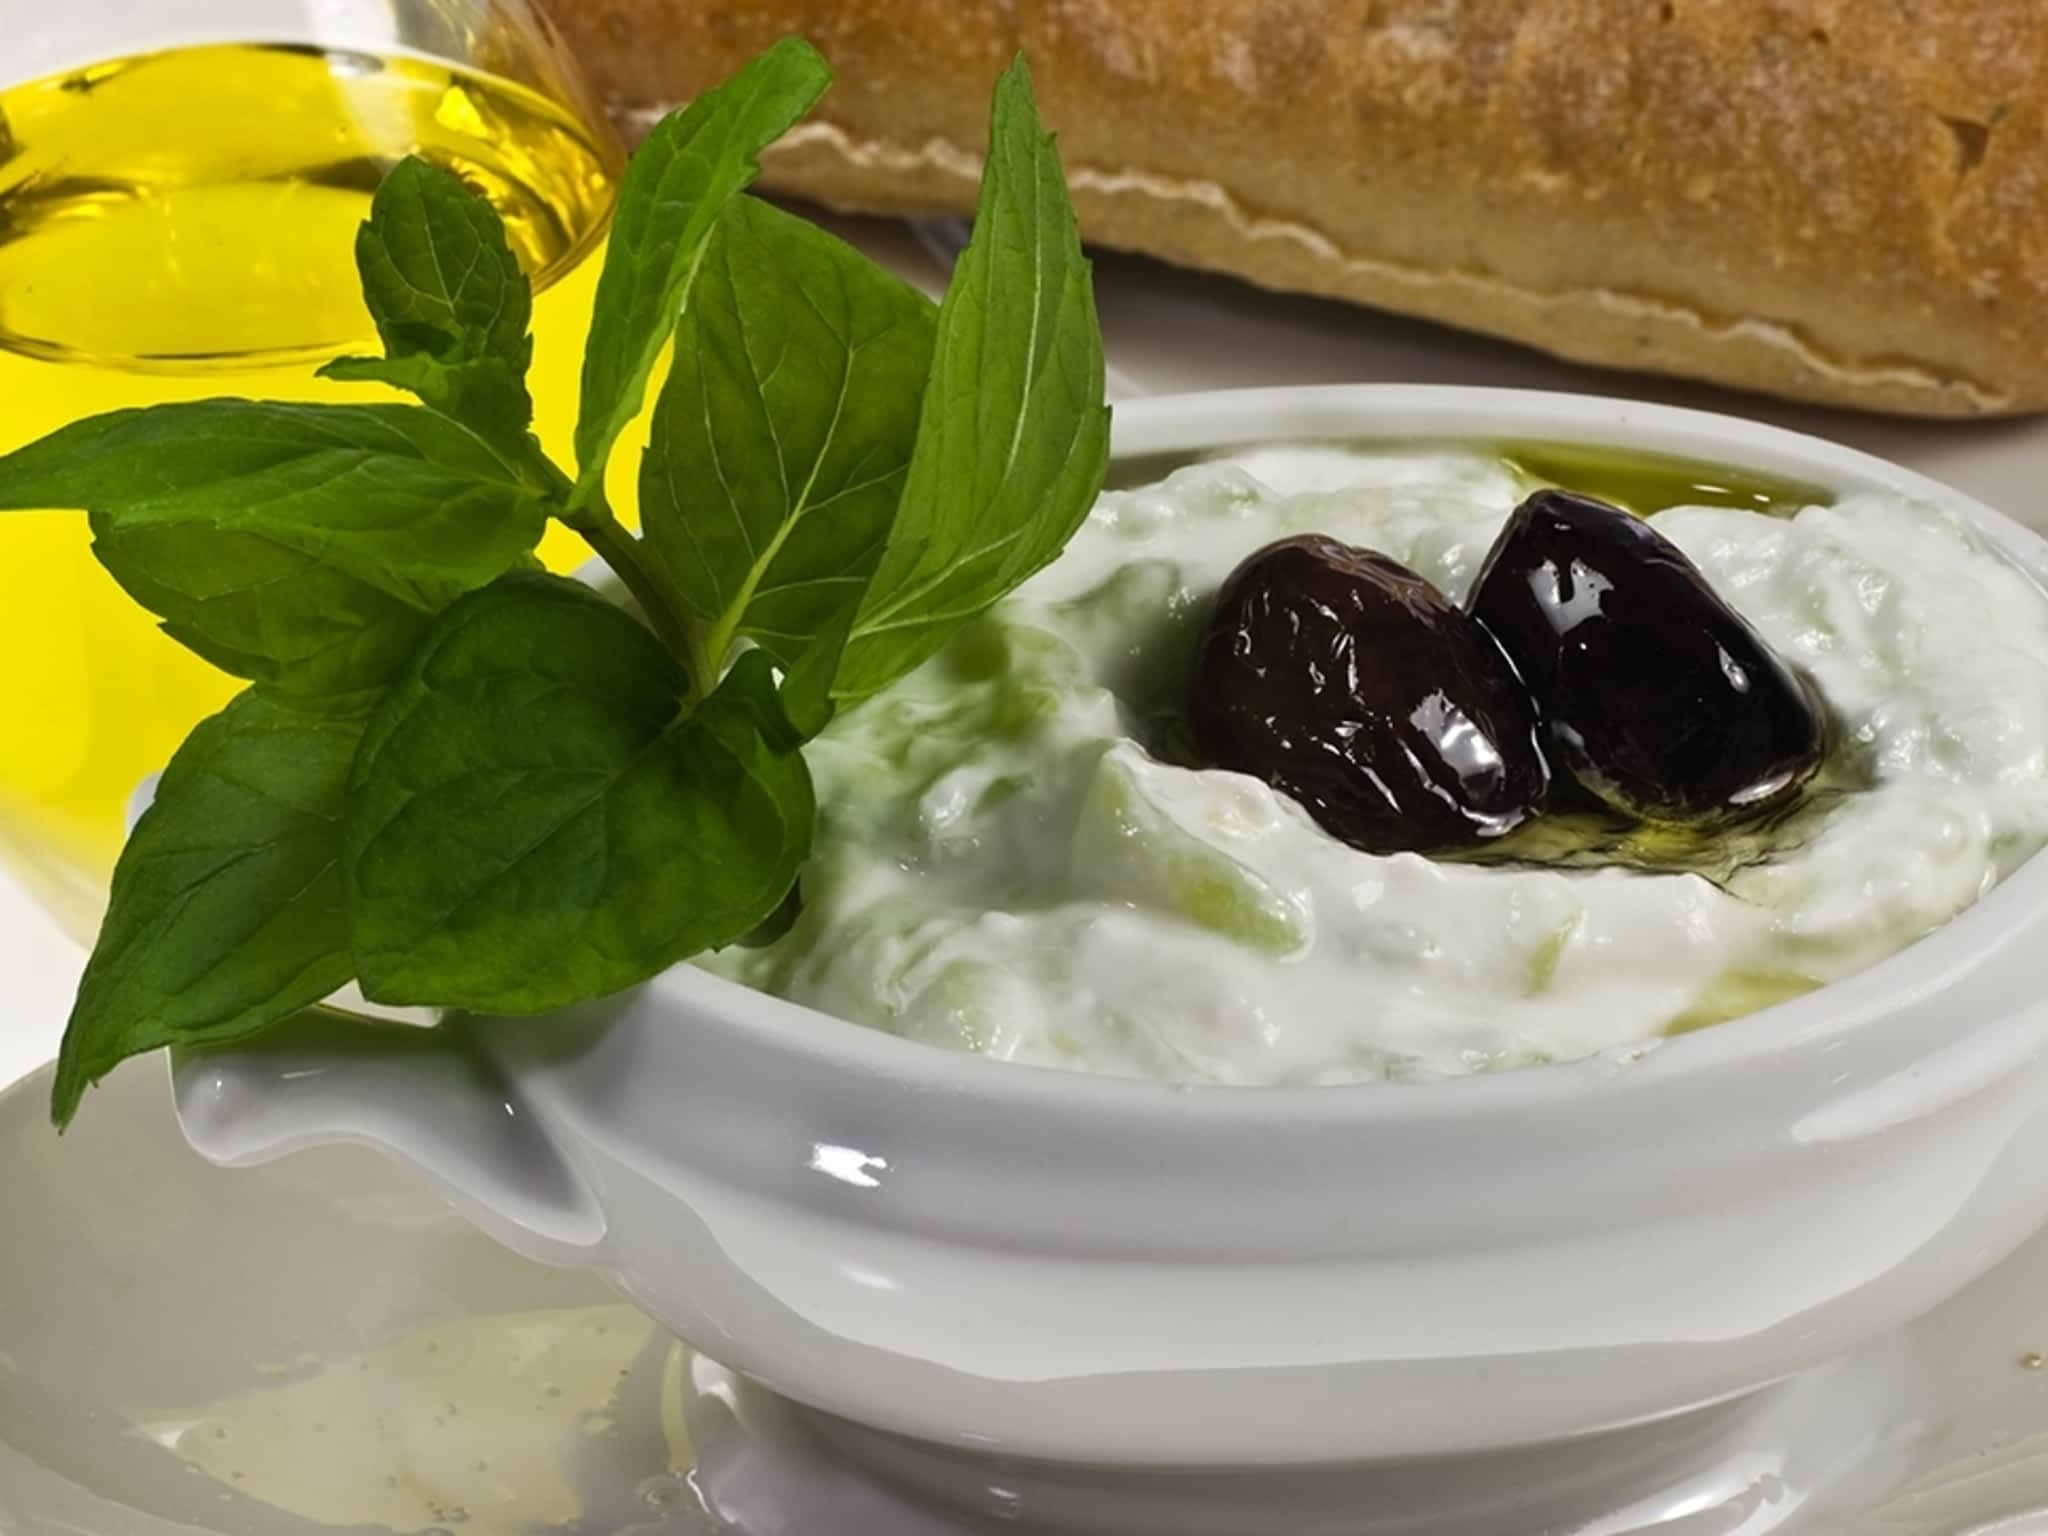 photo Taste Of Greek Cuisine